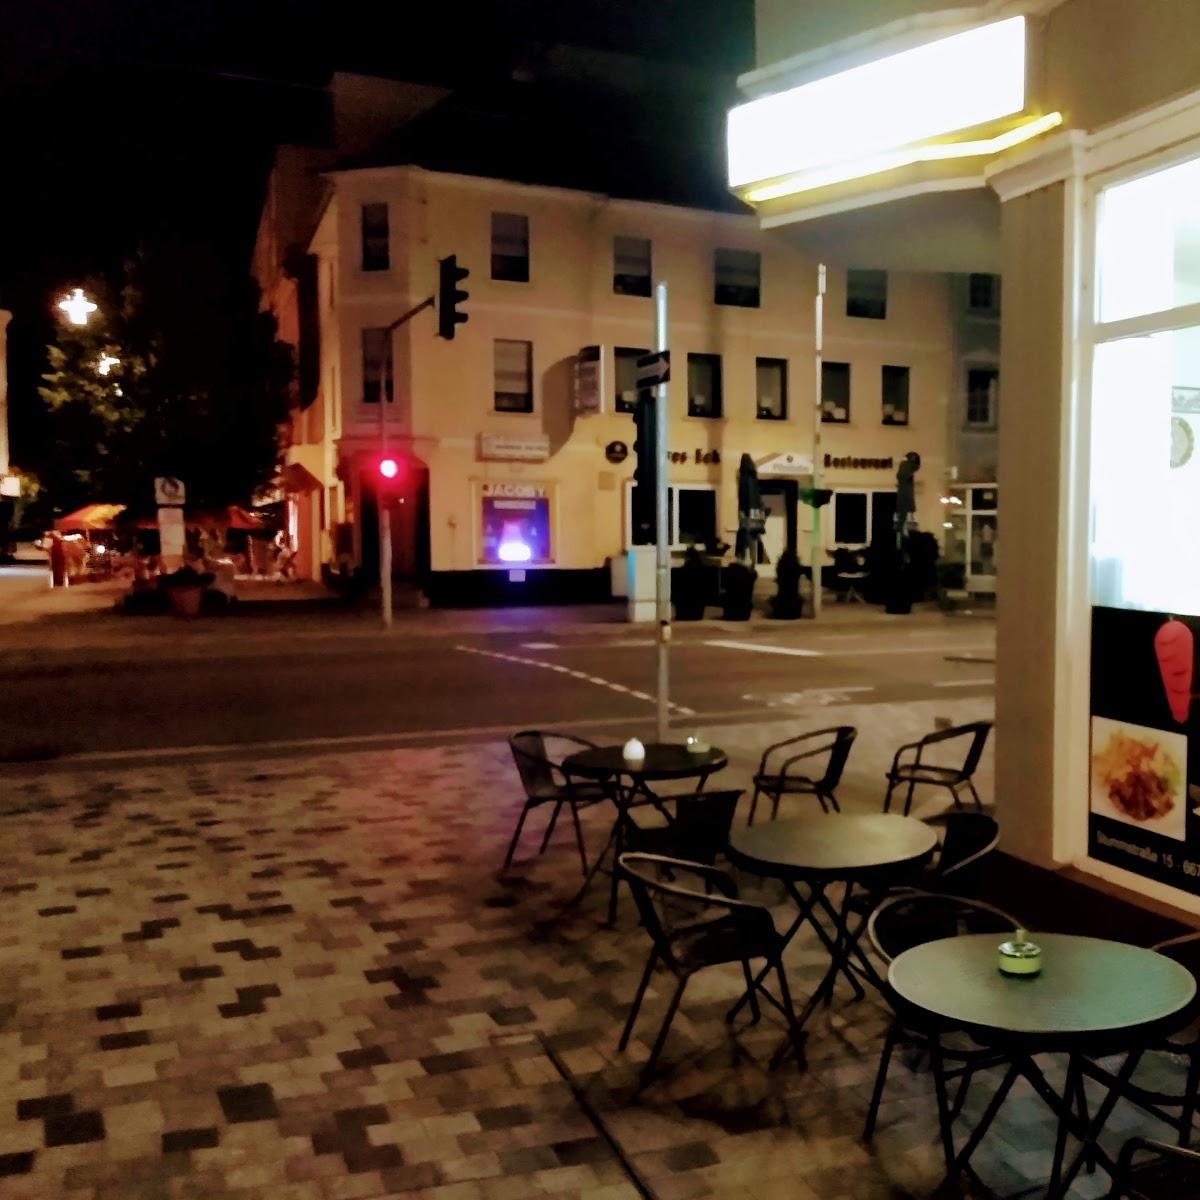 Restaurant "Dillinger Kebab & Pizza Haus" in Dillingen-Saar